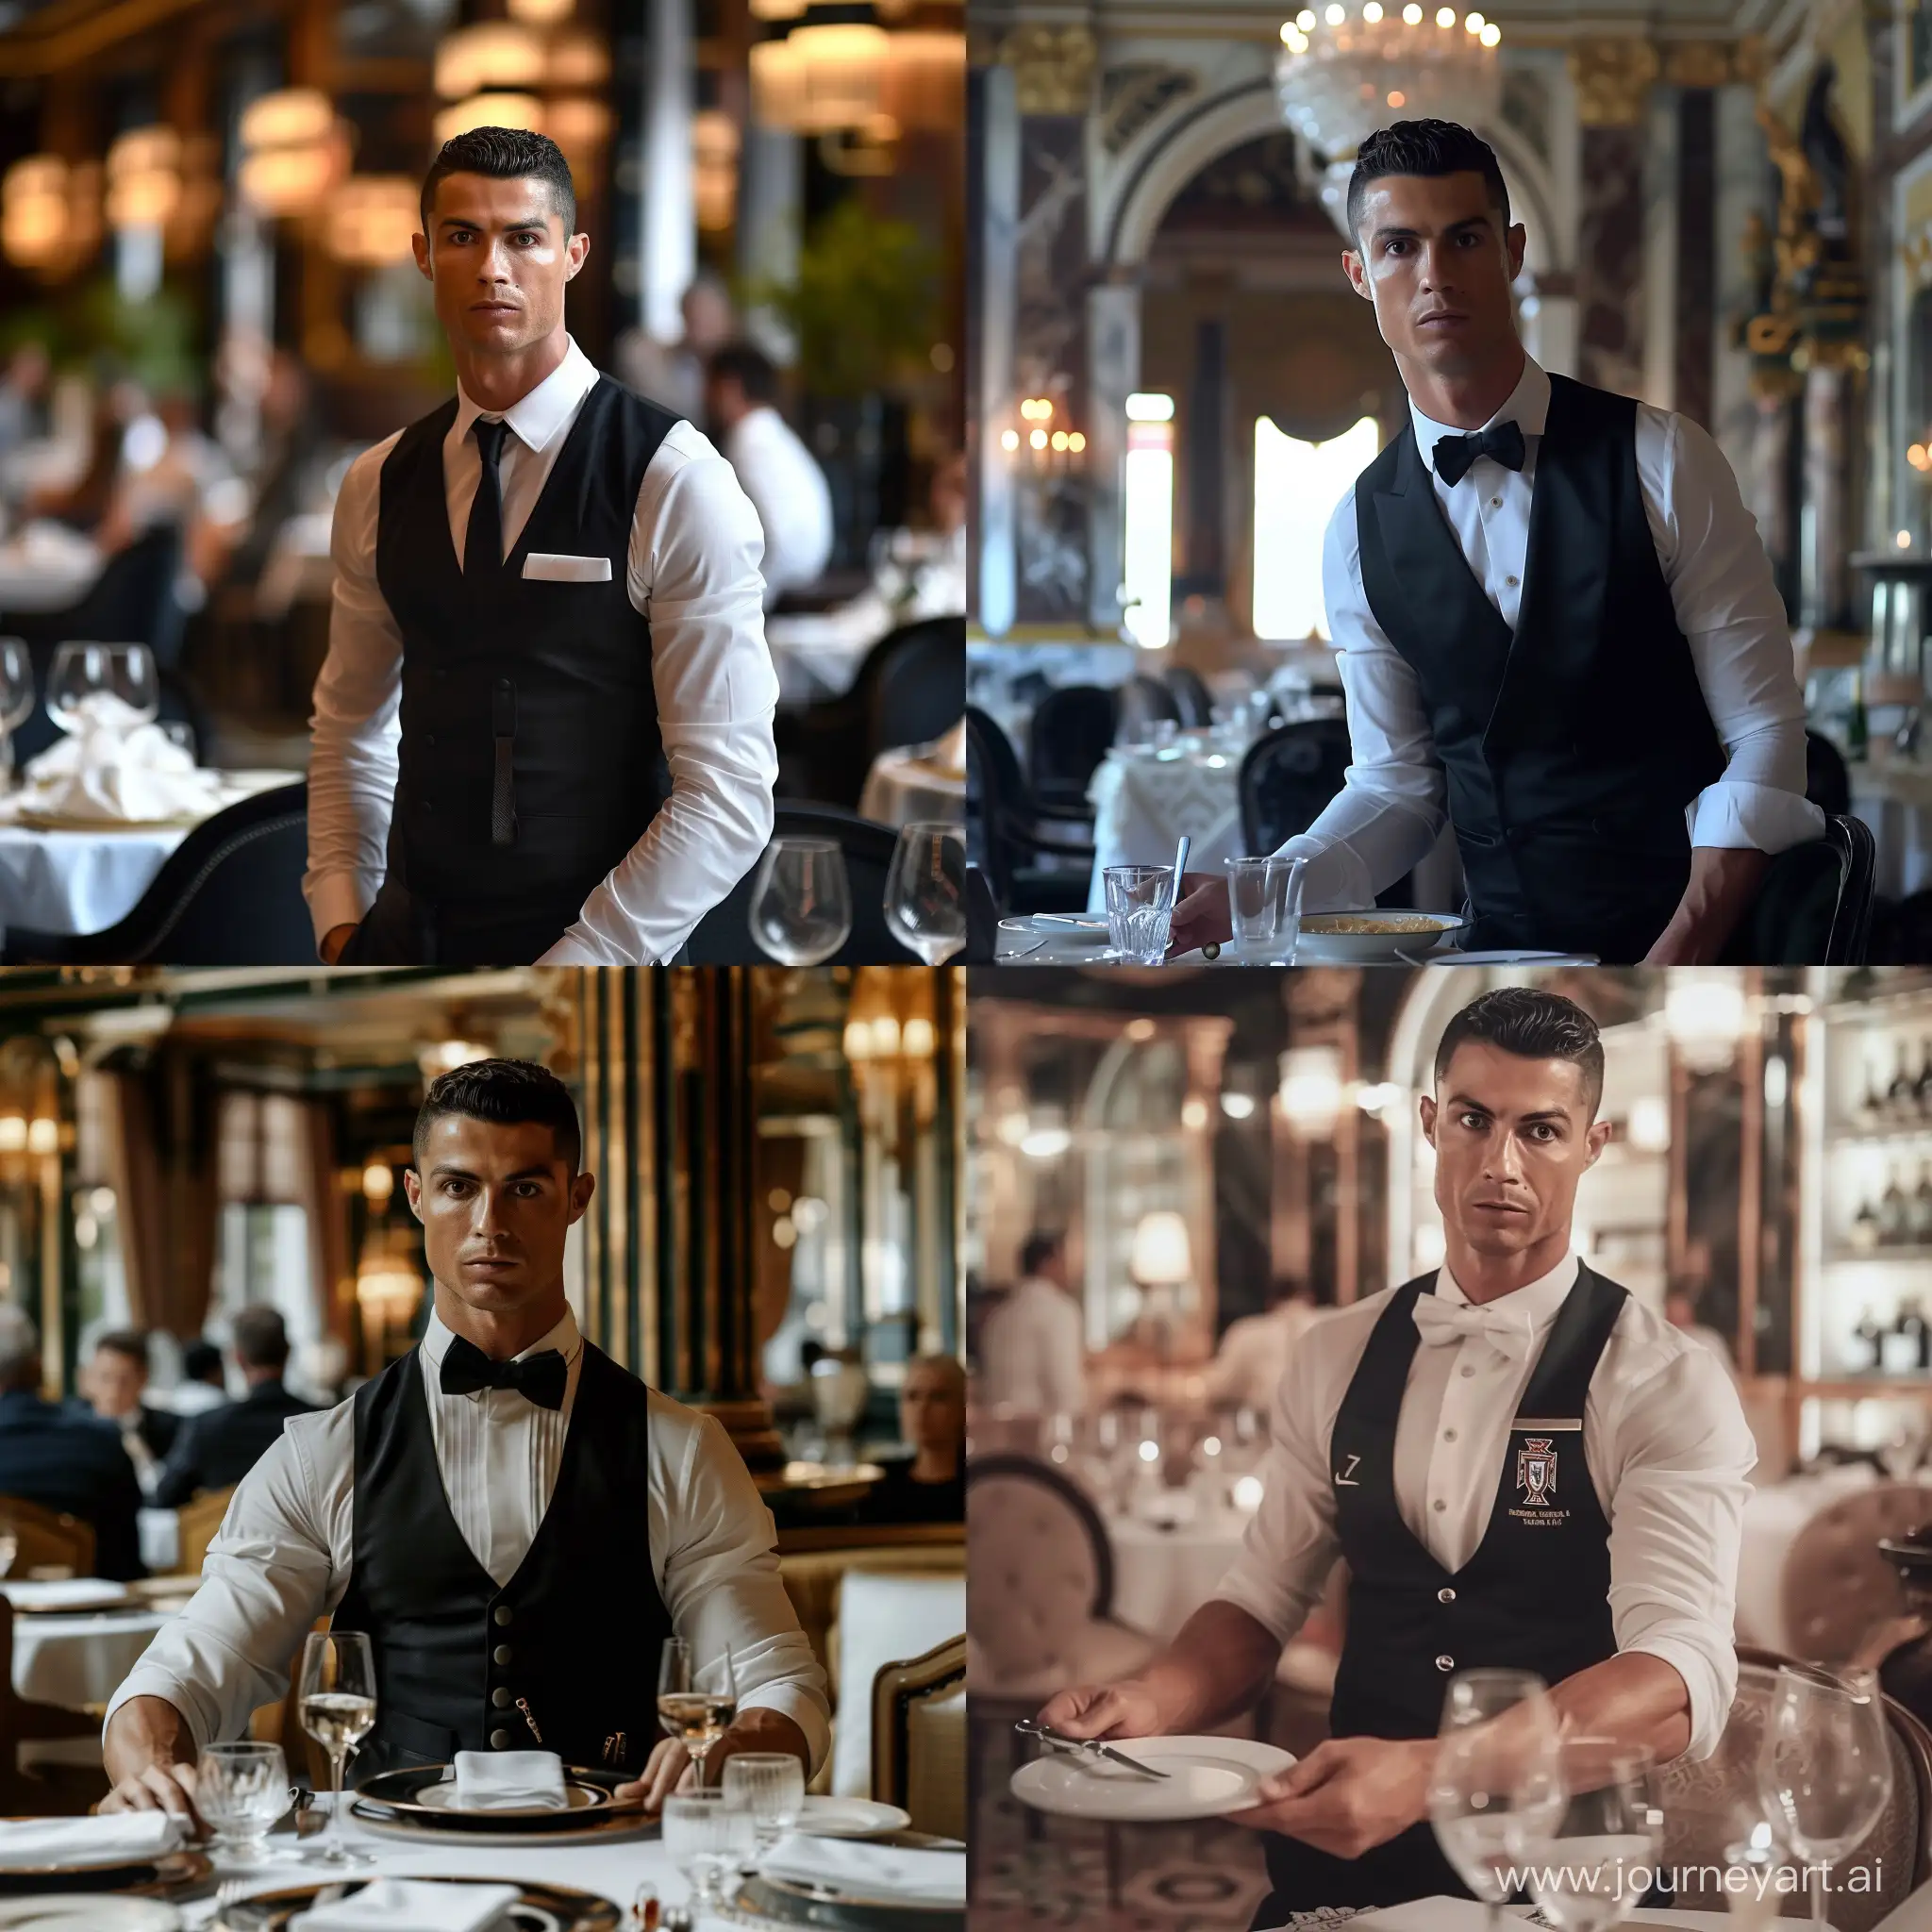 cristiano ronaldo working as awaiter in a luxury restaurant